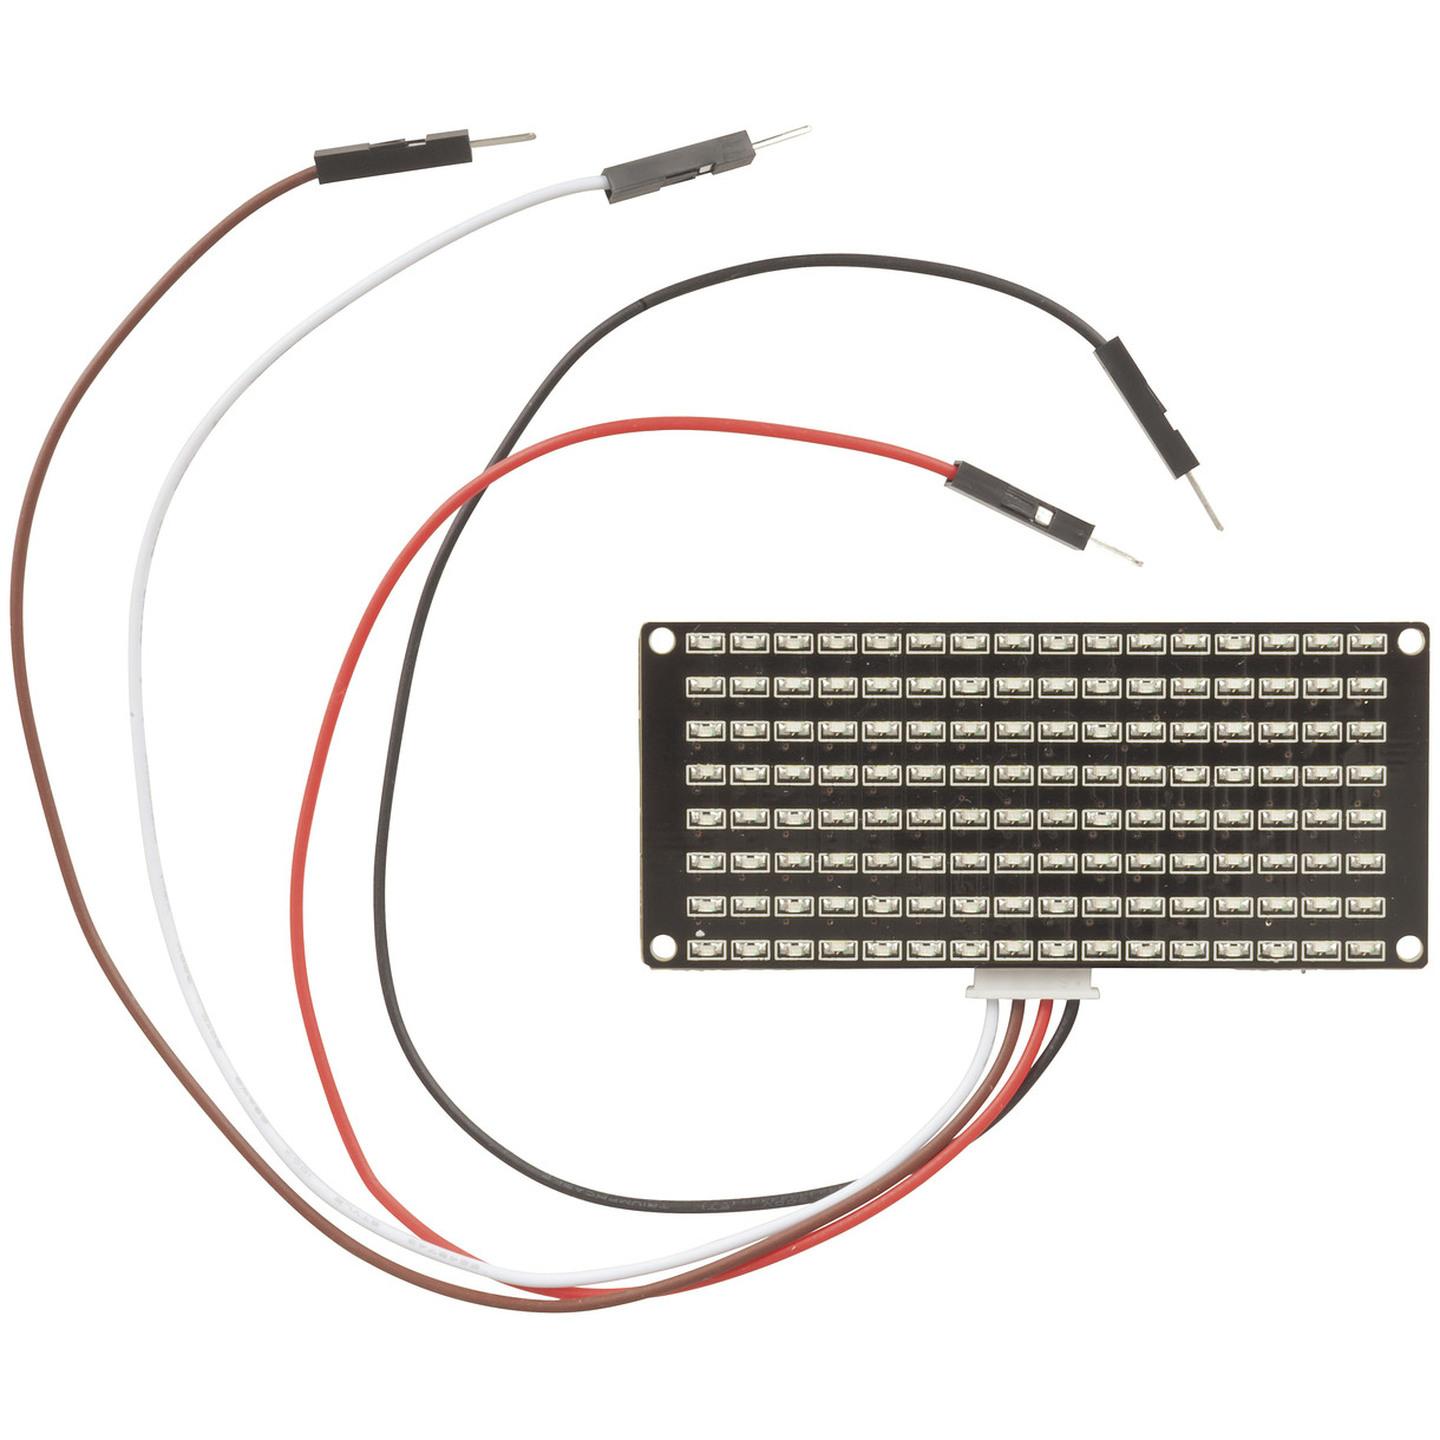 Duinotech Arduino Compatible 8 x 16 LED Matrix Display